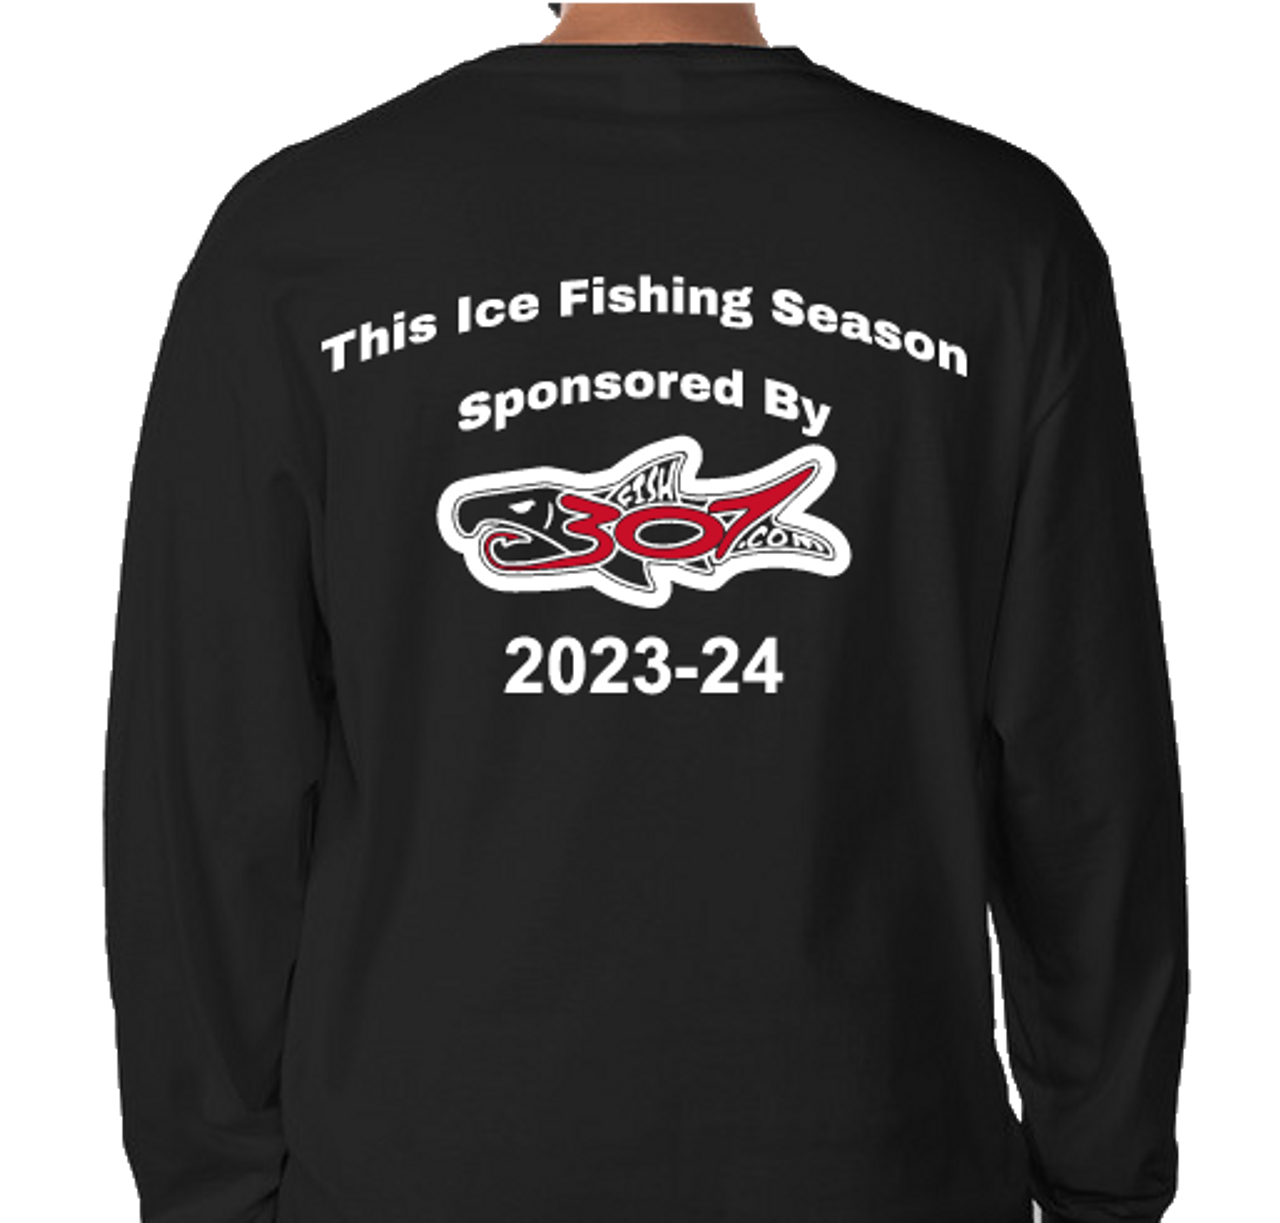 FISH307 2023-24 Ice Fishing Hanes Authentic Long Sleeve T-Shirt 